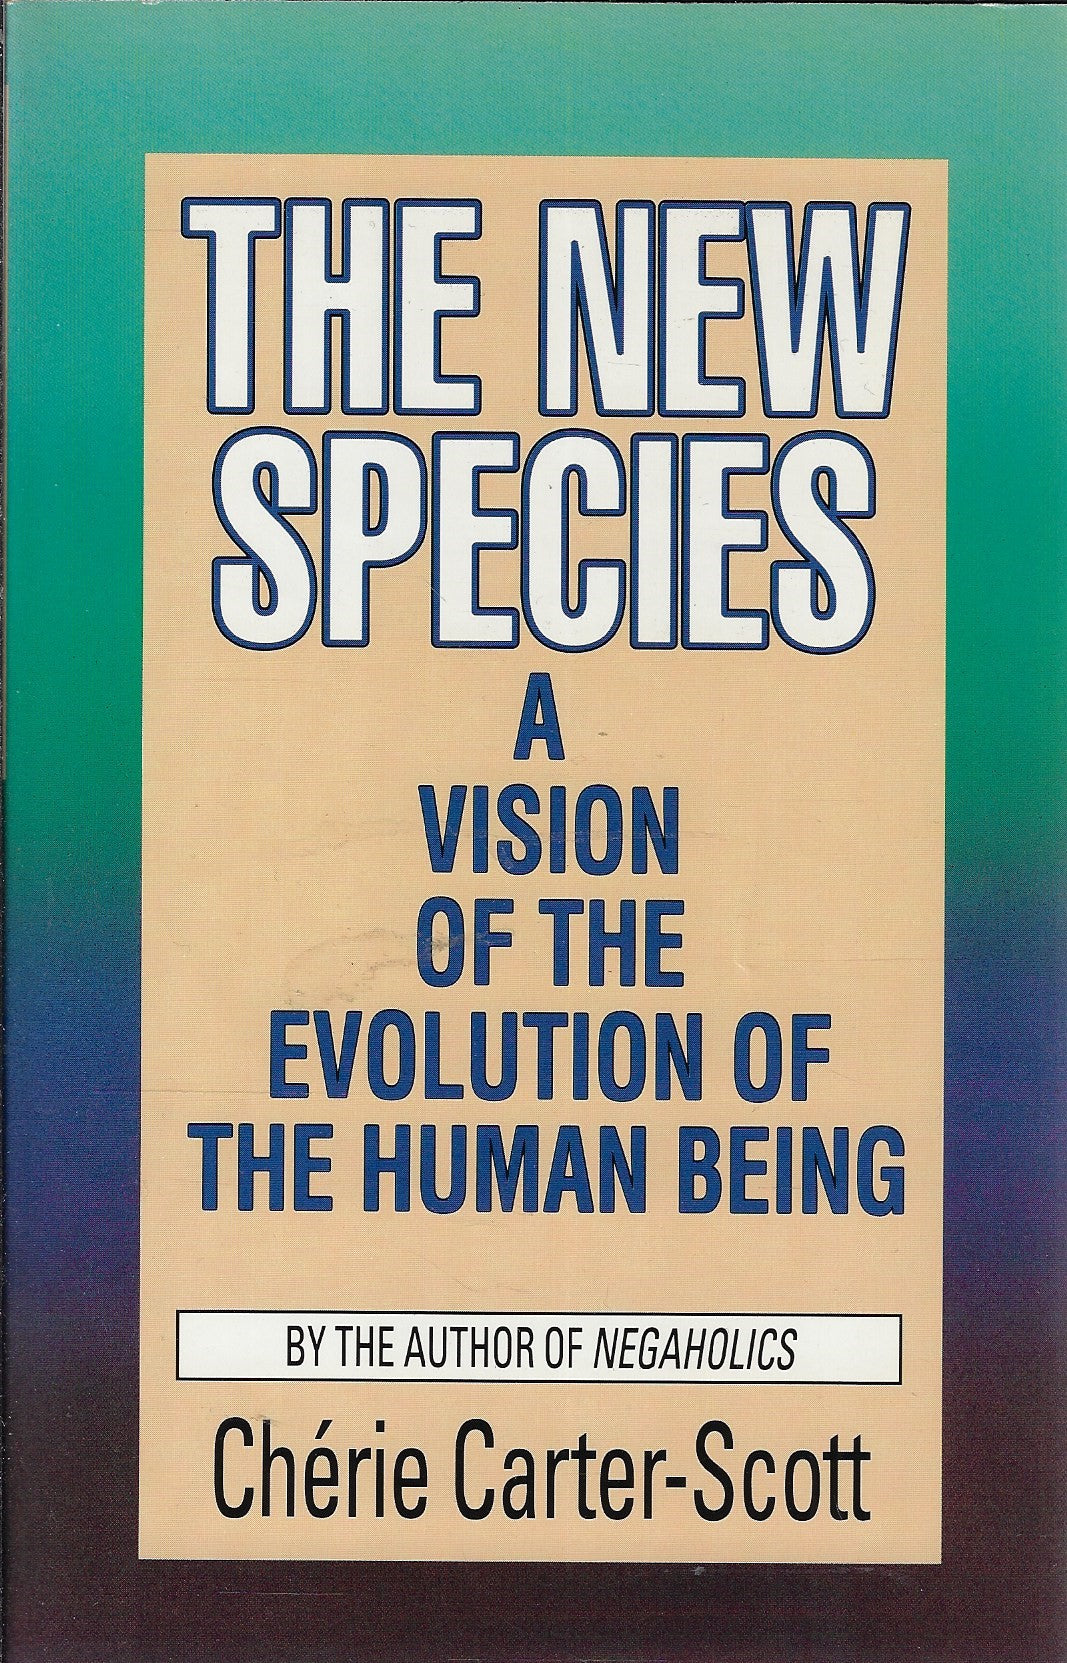 The new species